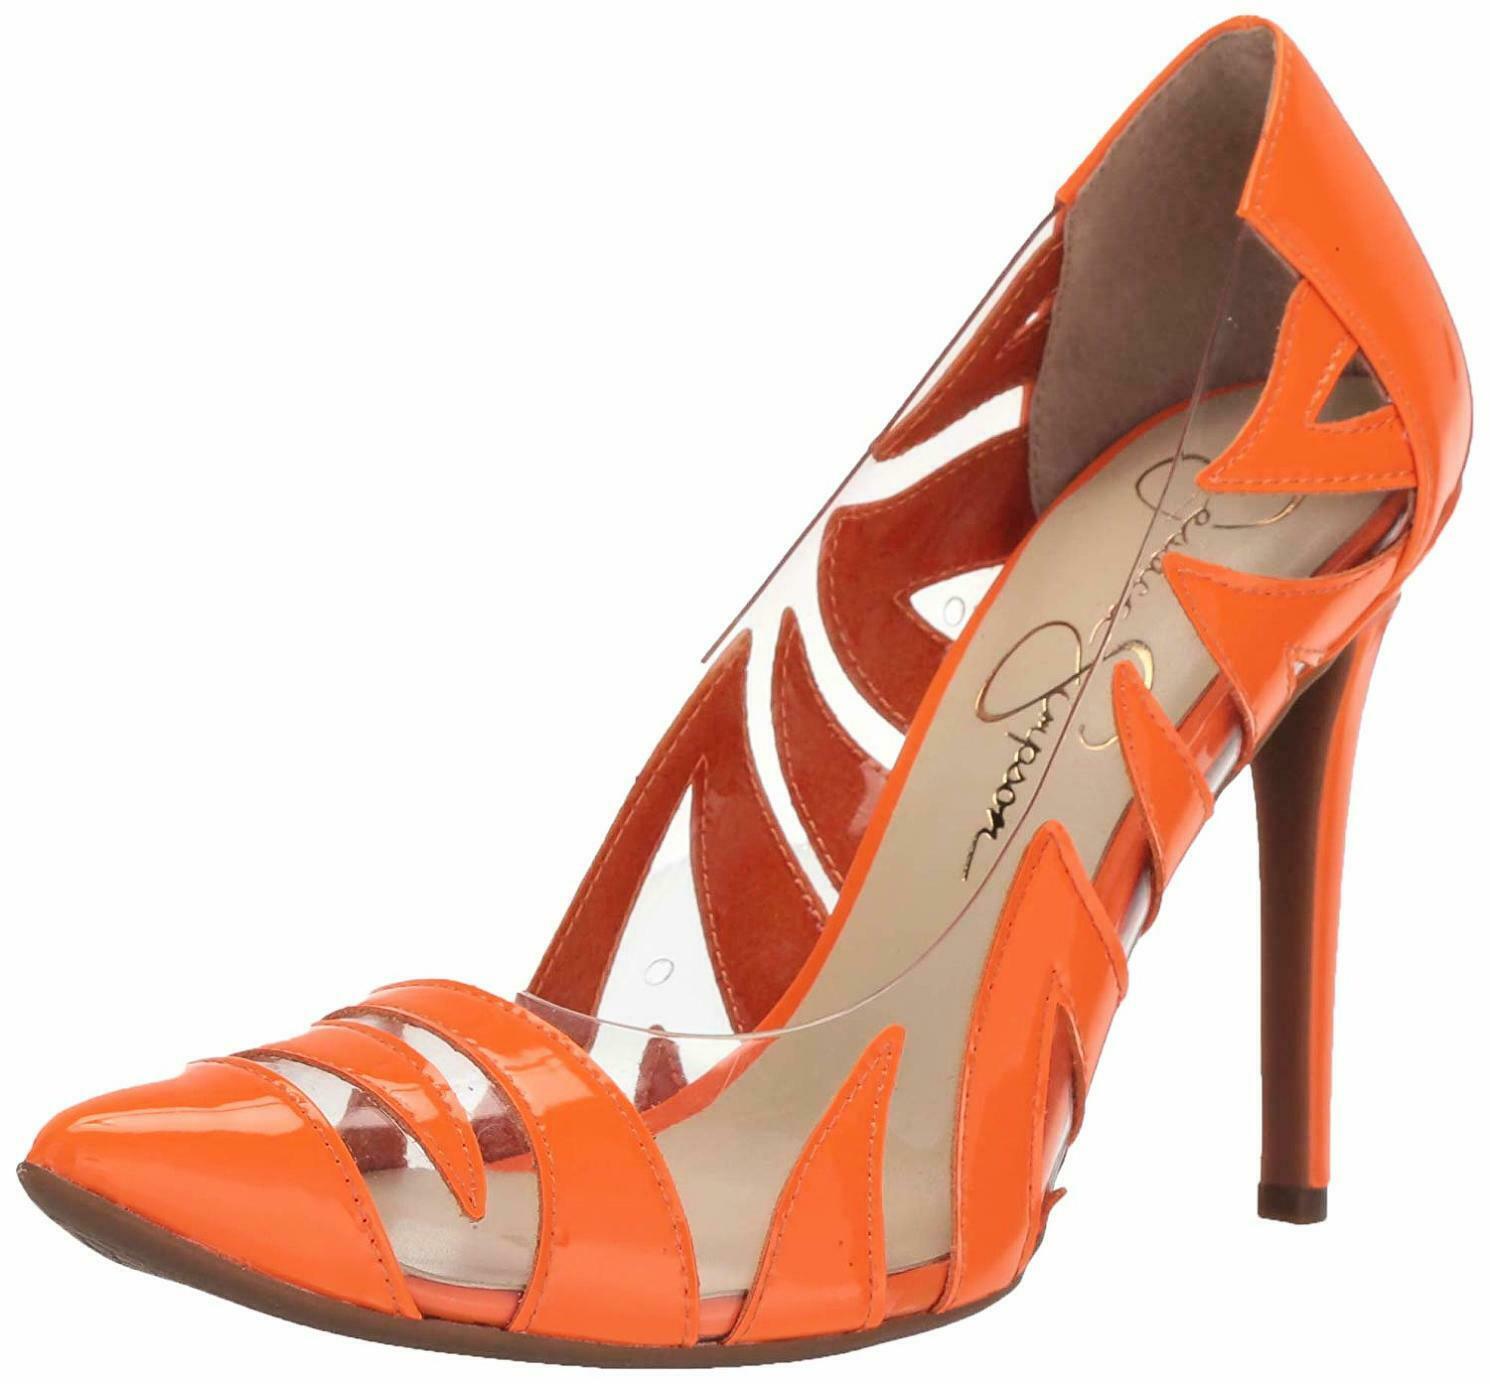 Jessica Simpson PALMRA Pump Neon Orange Clear Pointed Toe Stiletto Pumps - image 1 of 5